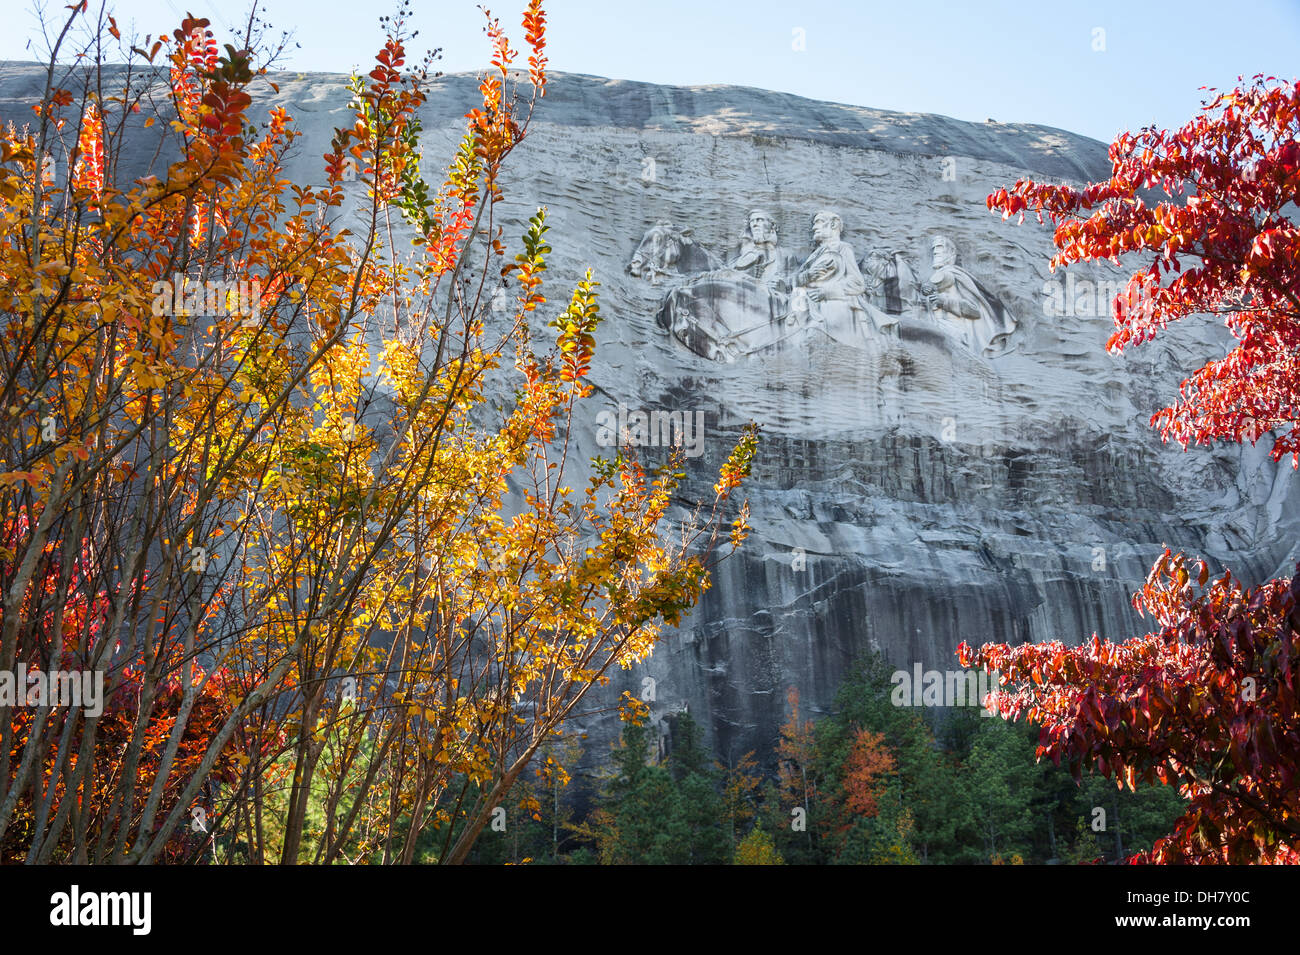 Fall colors on full display beneath the Confederate Memorial Carving at Stone Mountain Park near Atlanta, Georgia. (USA) Stock Photo